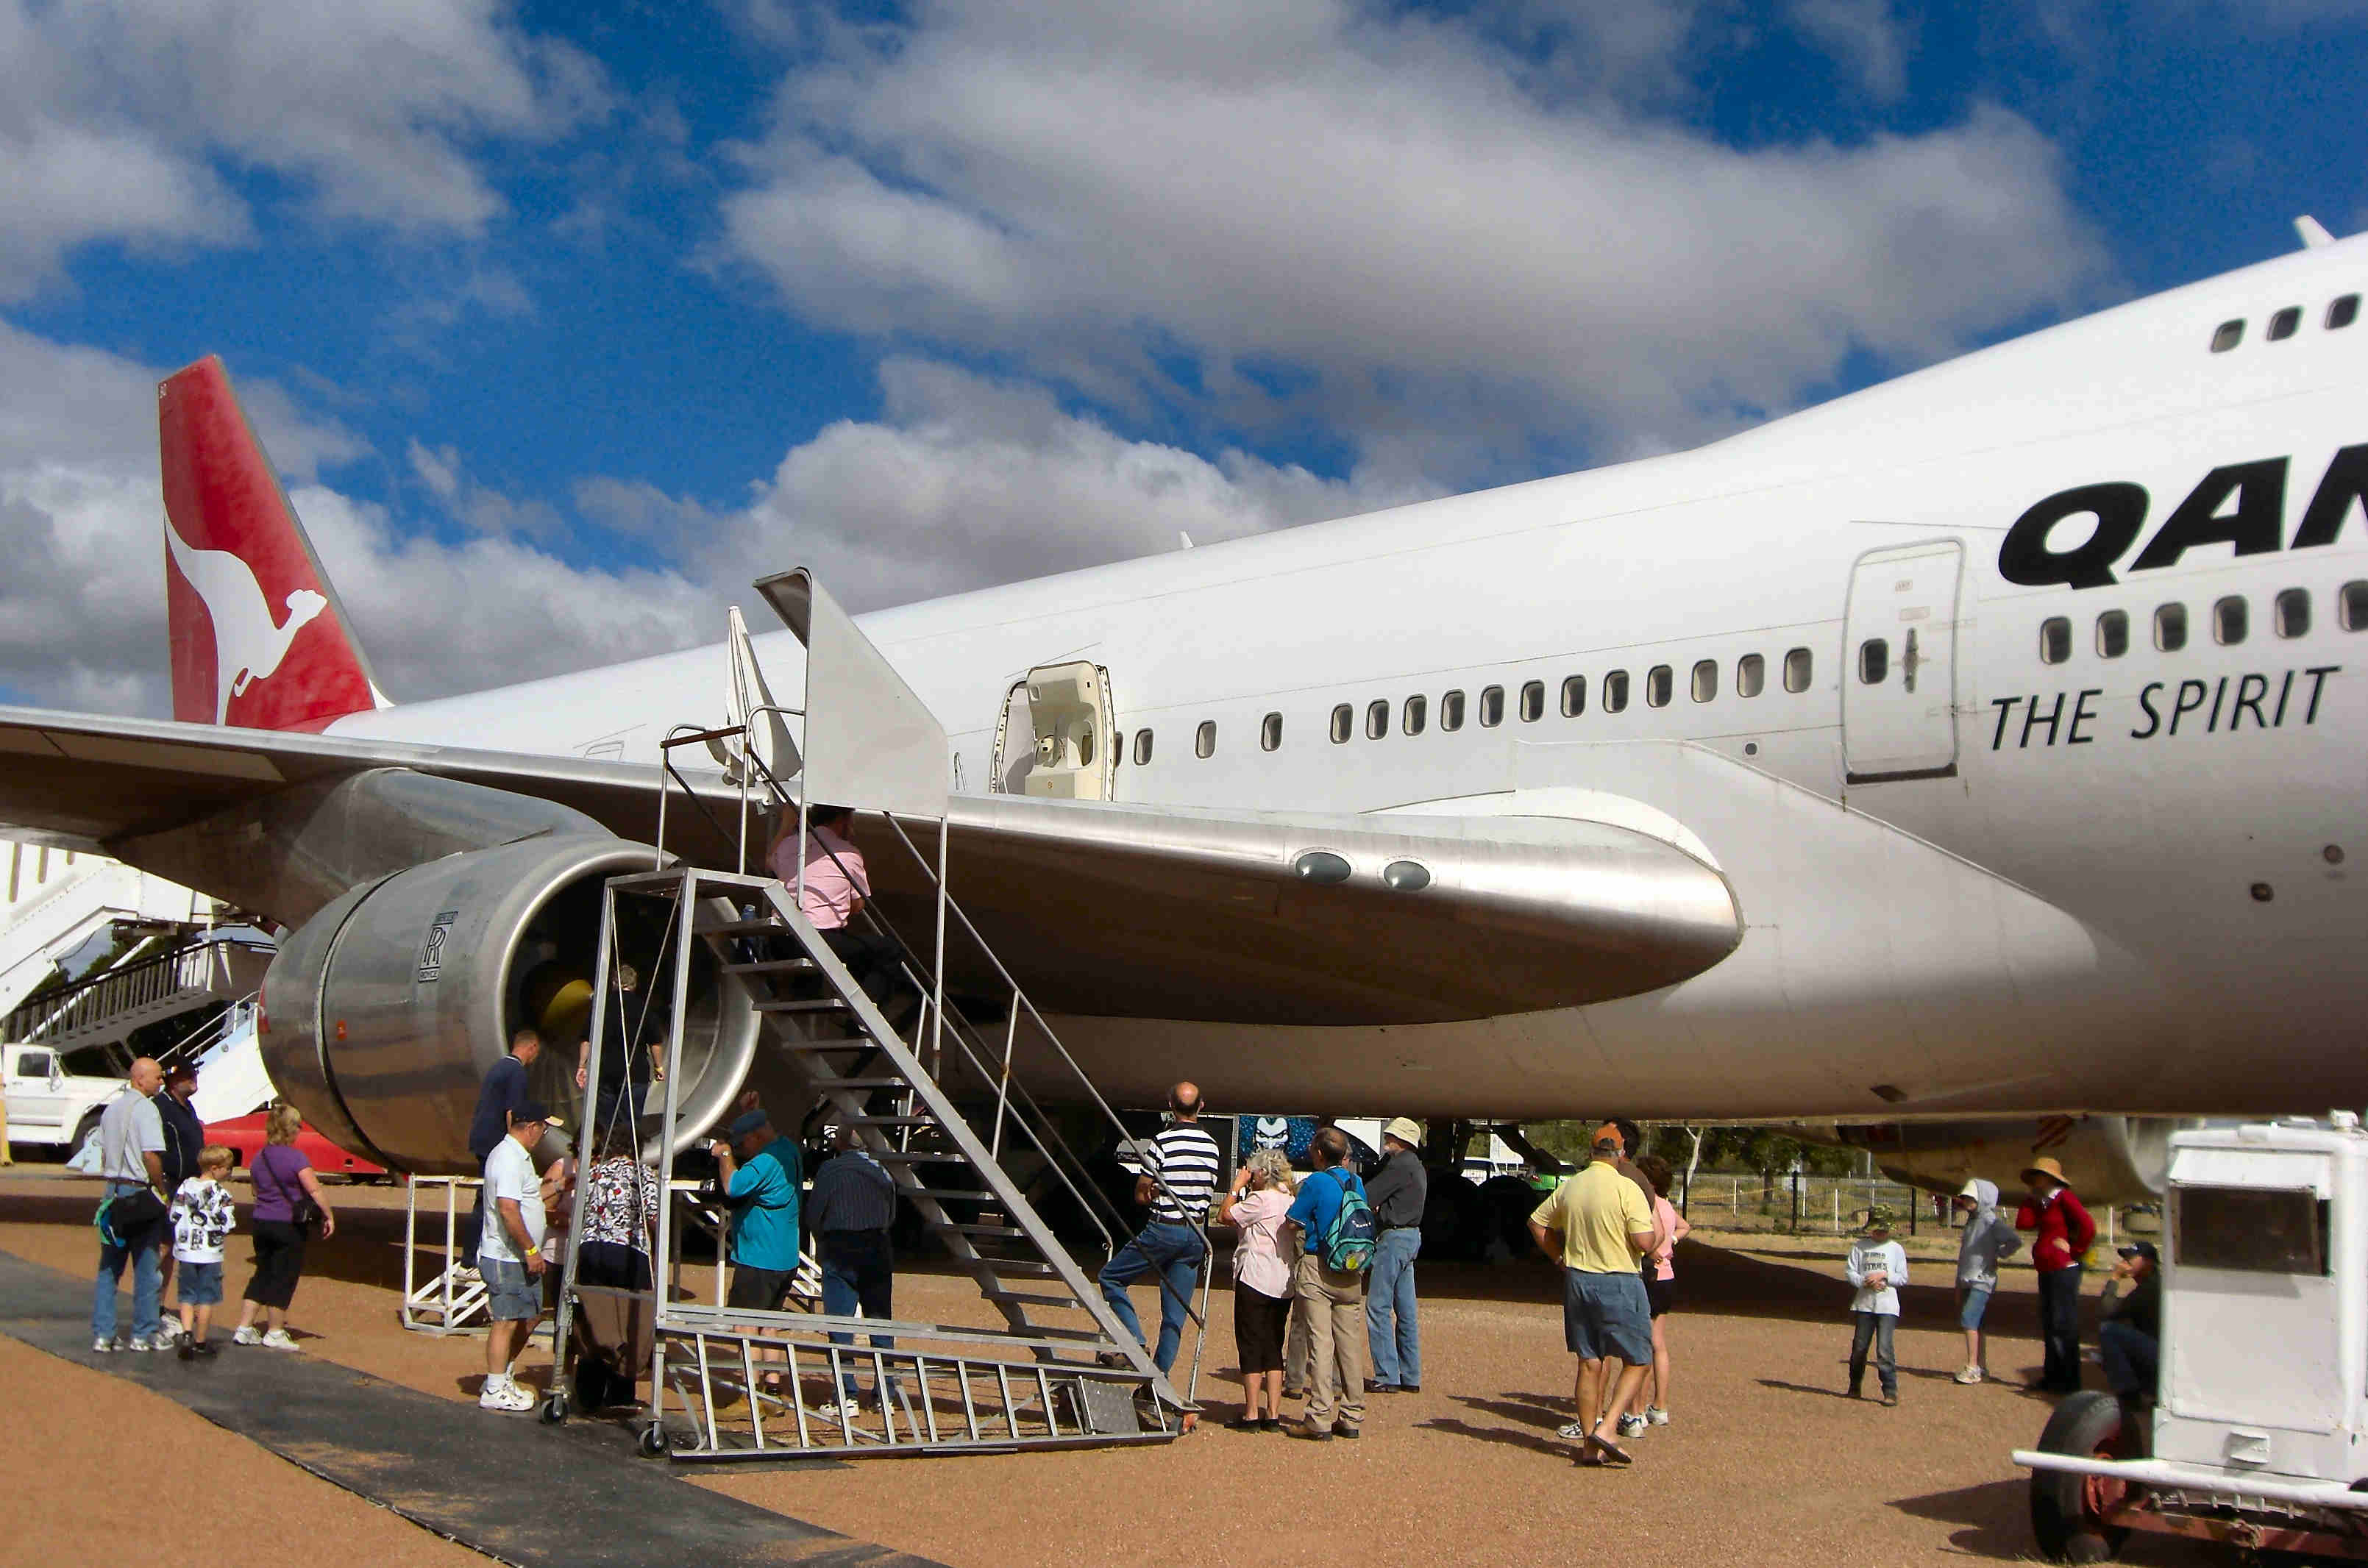 Qantas 747 on display at Longreach